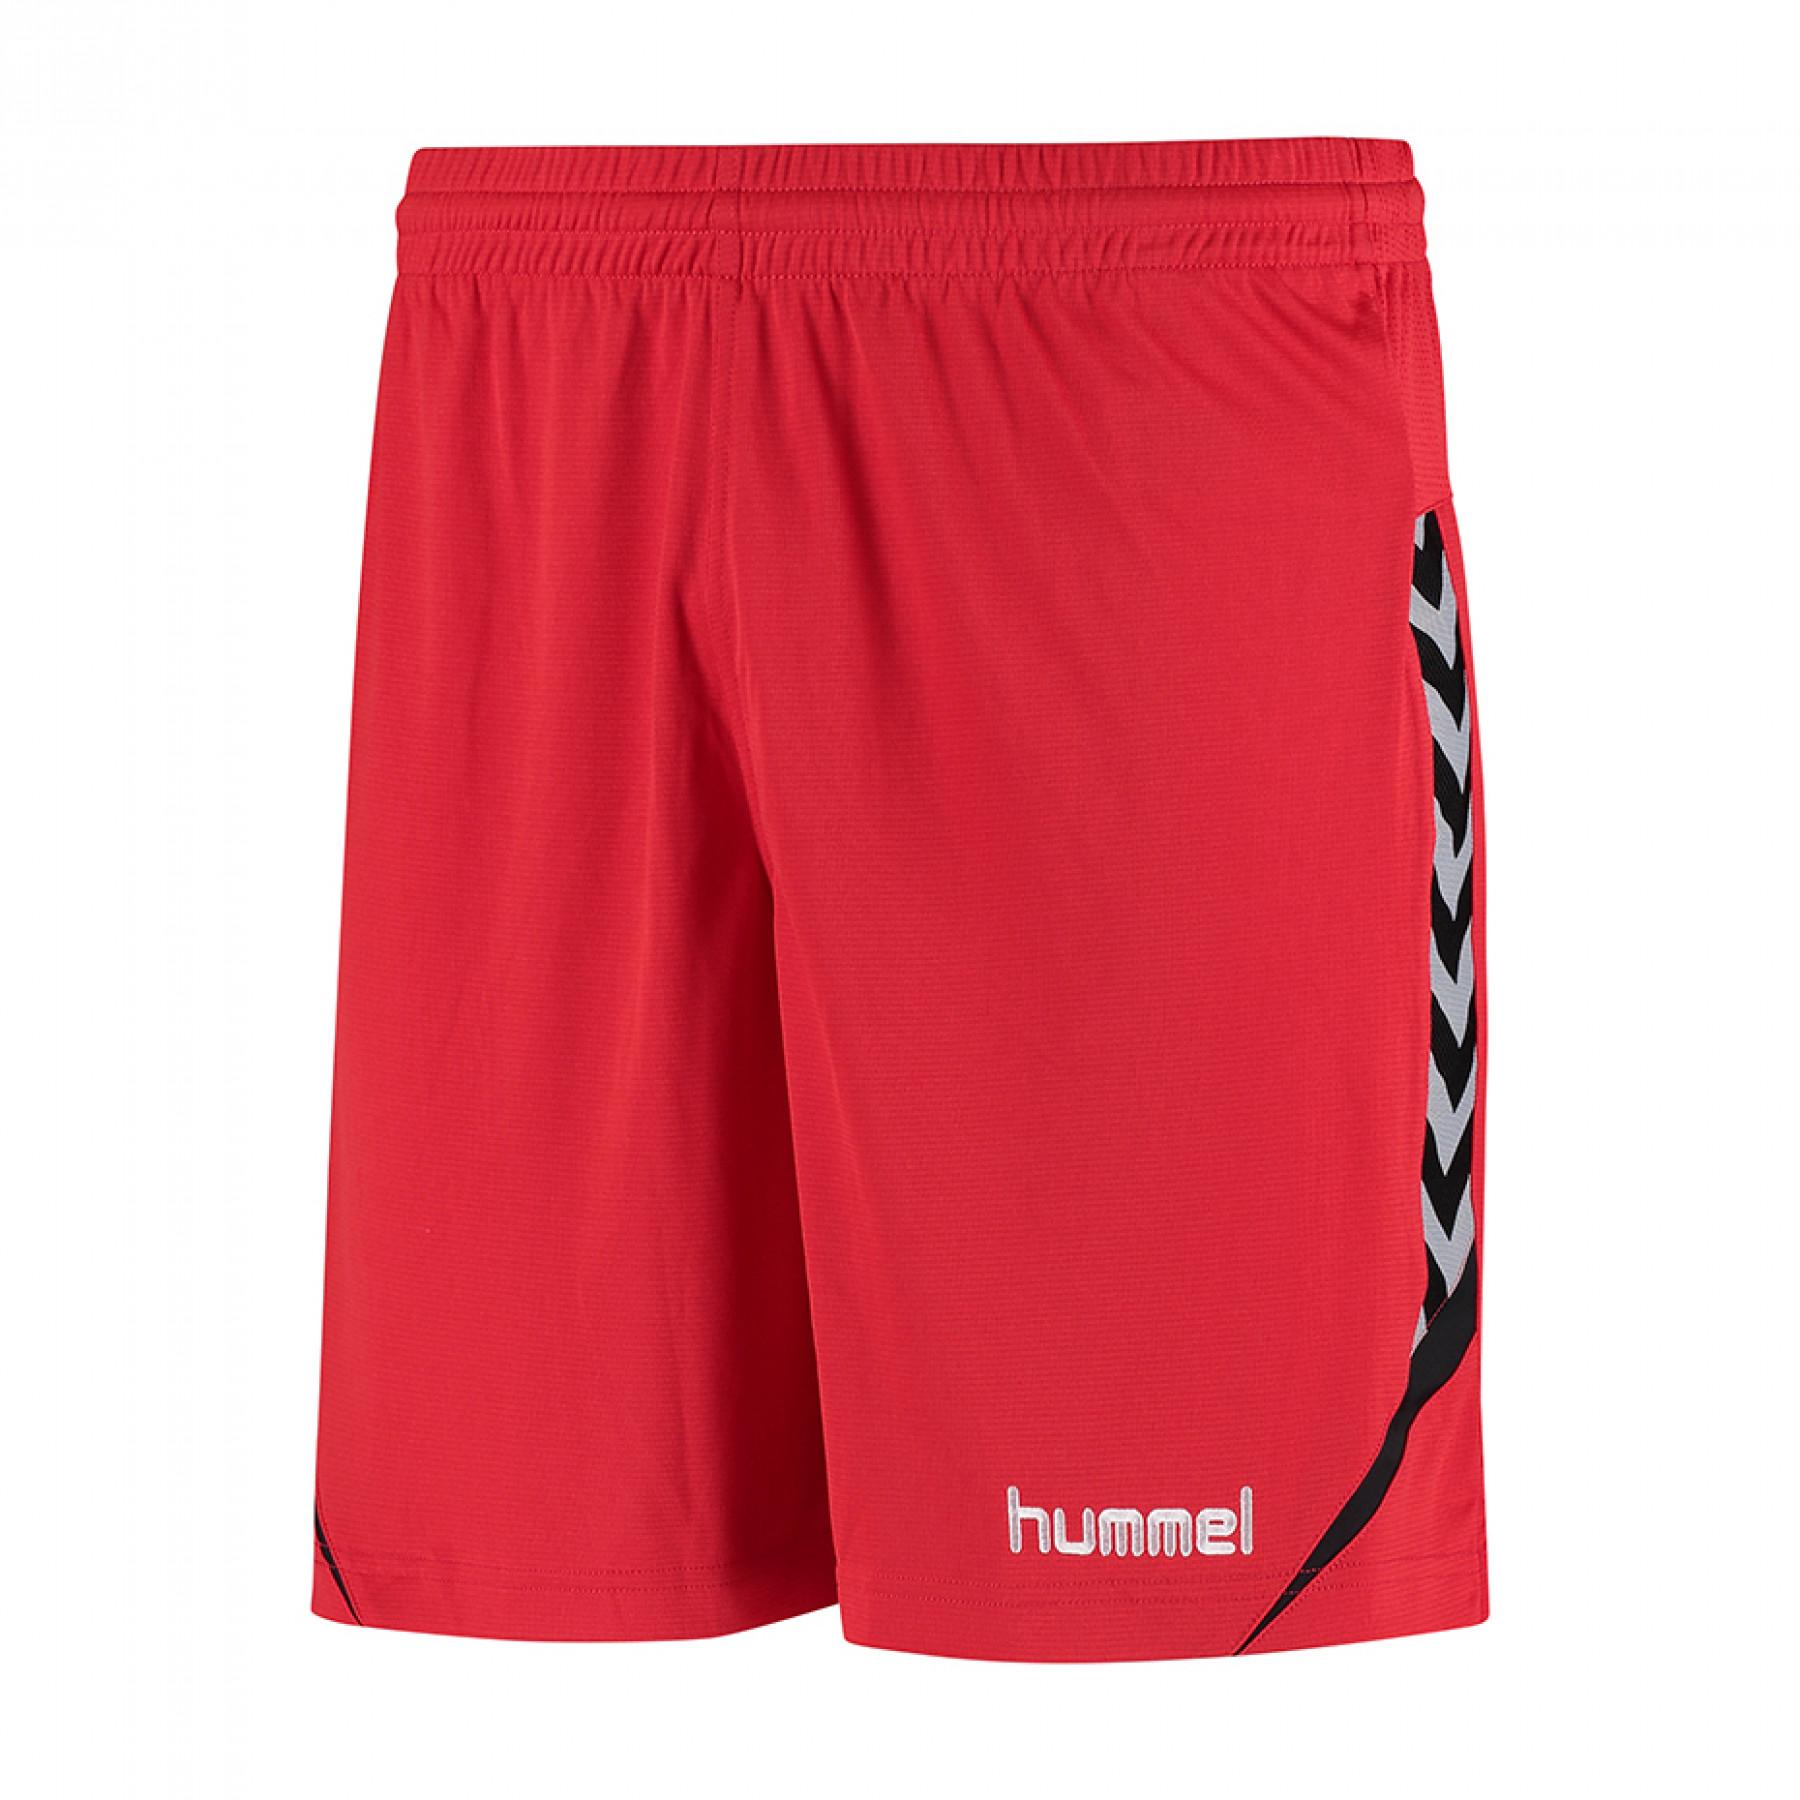 Short Hummel auth charge poly - Hummel - Handball wear